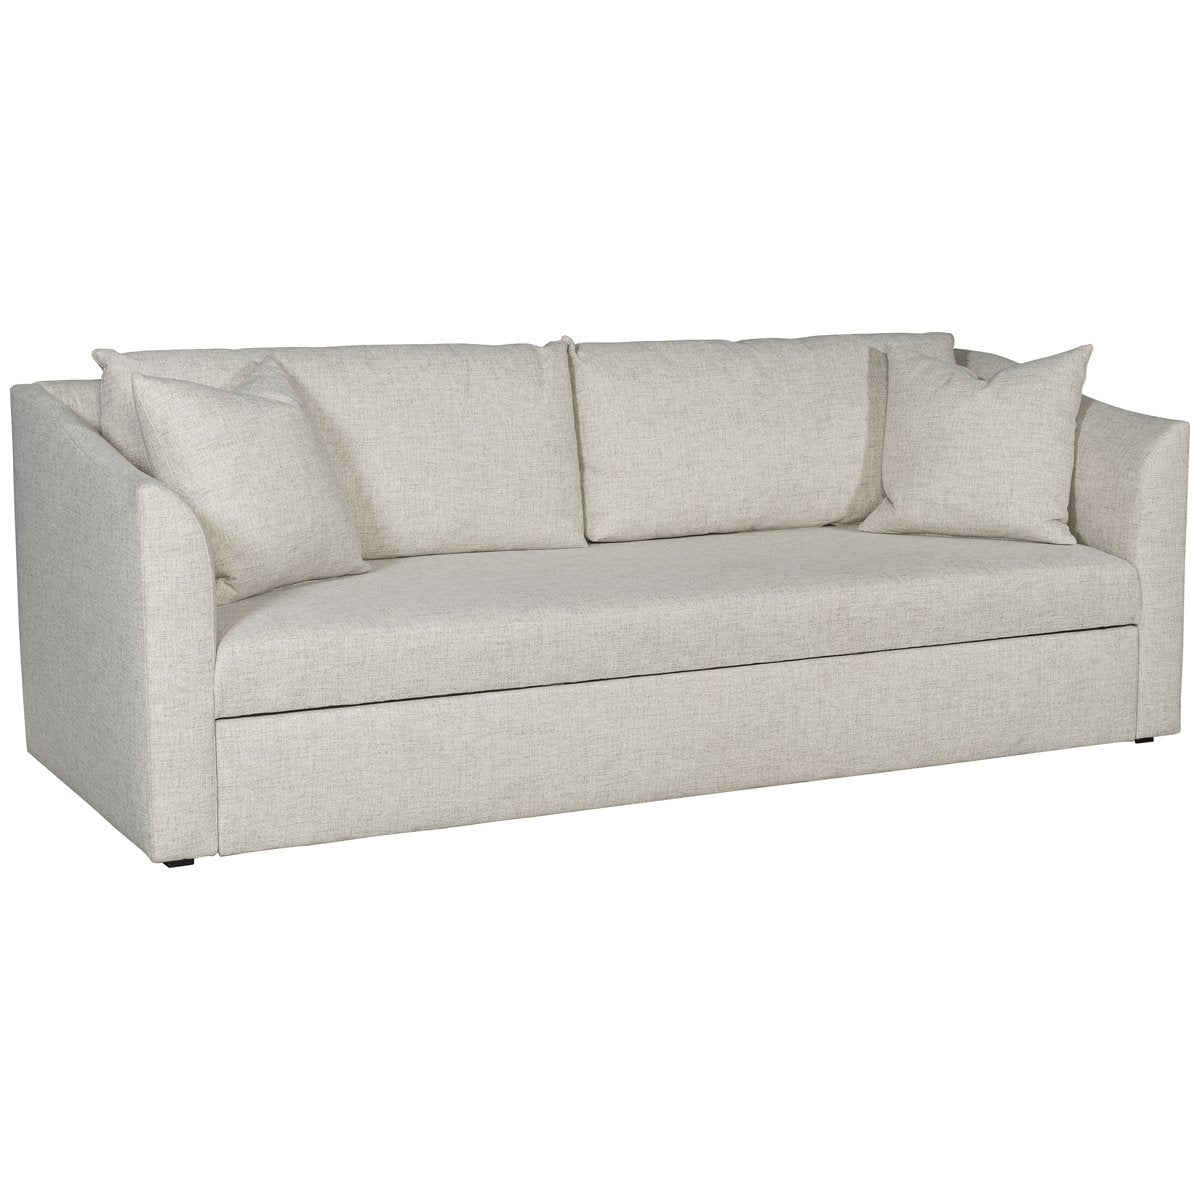 Vanguard Furniture Addie Pull Out Sleeper Sofa in Jack Linen